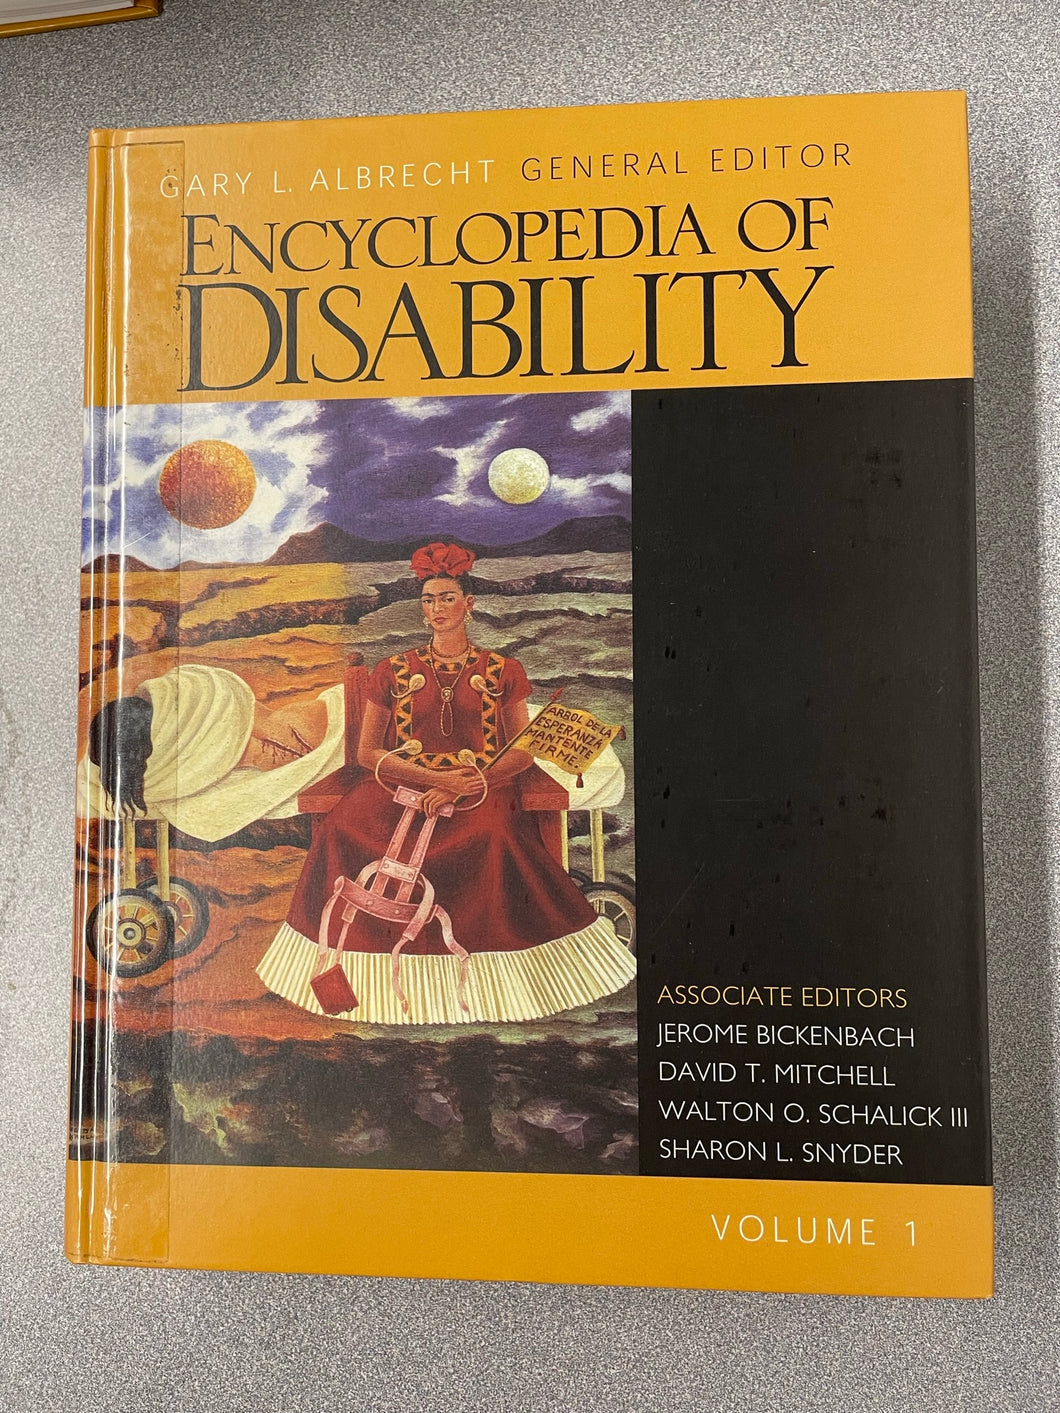 Encyclopedia of Disability, Albrecht, Gary L, ed., [2006] SS 6/23